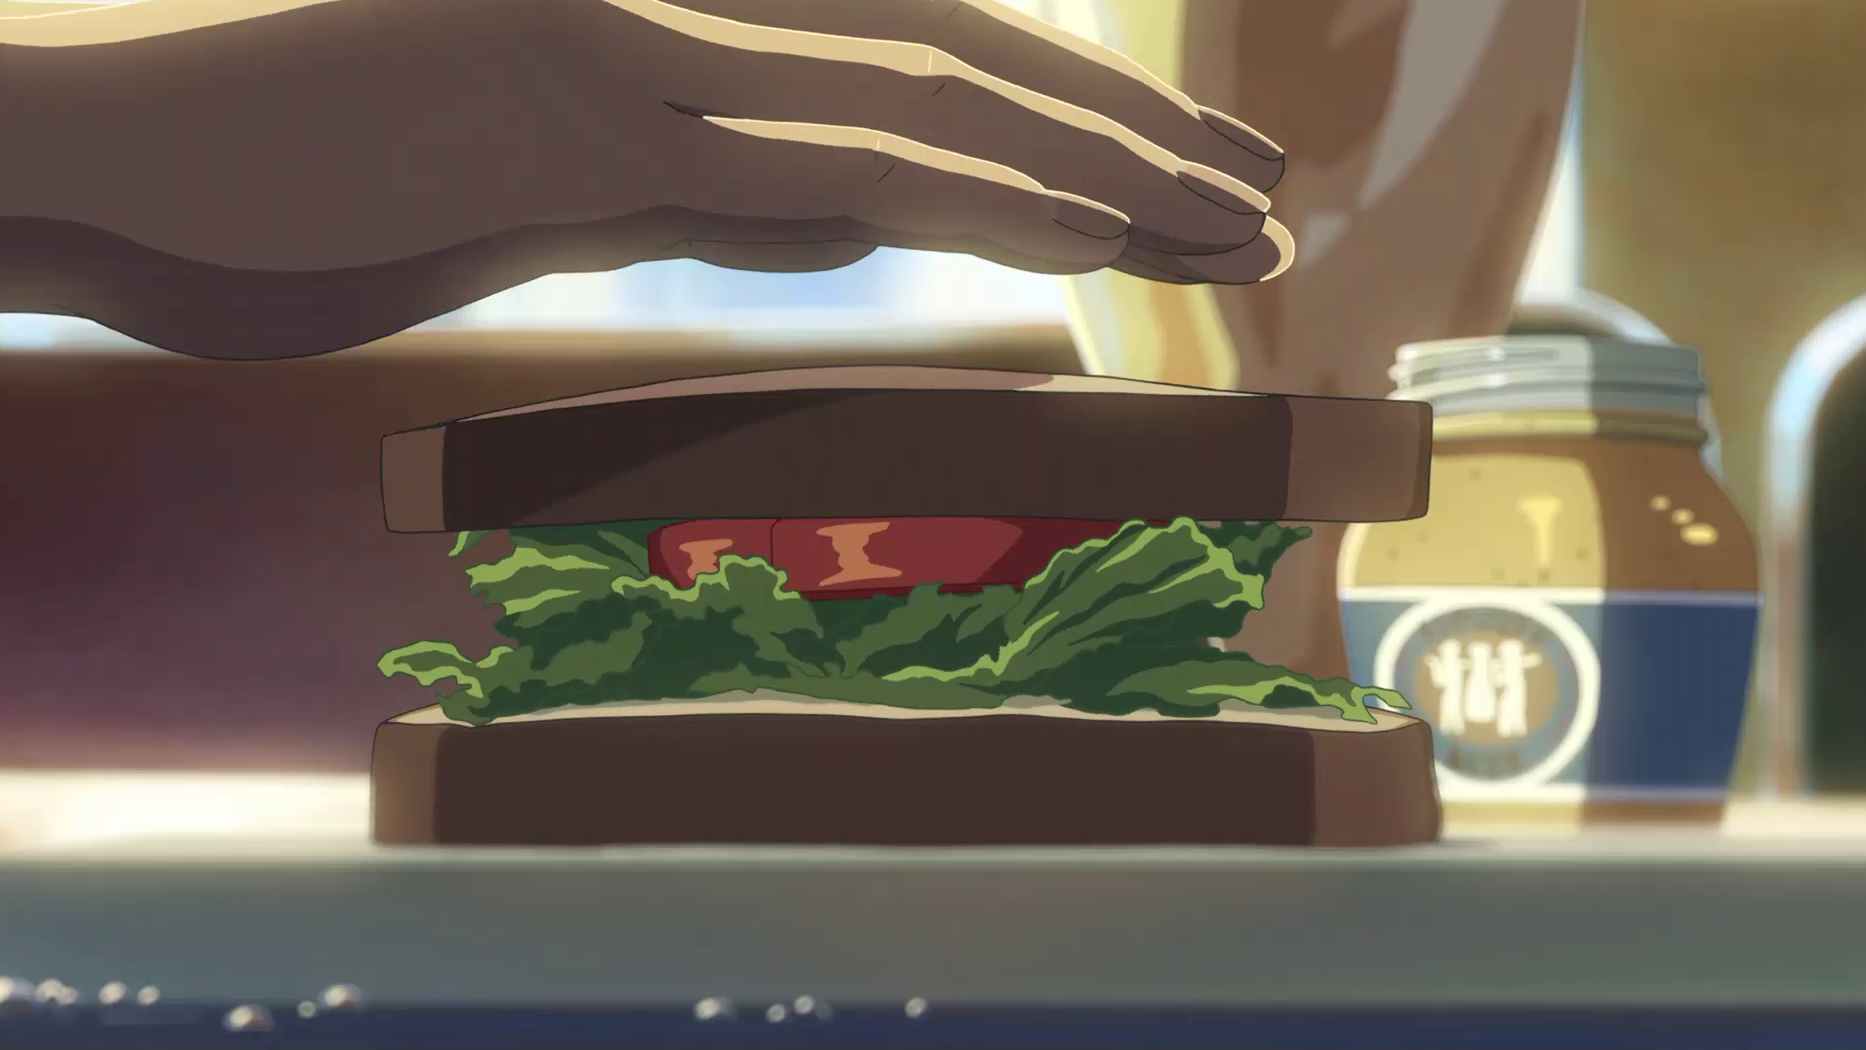 Anime Food _ tomato Soup & jalapeño bacon toasted Sandwich | Food, Cafe  food, Food illustrations